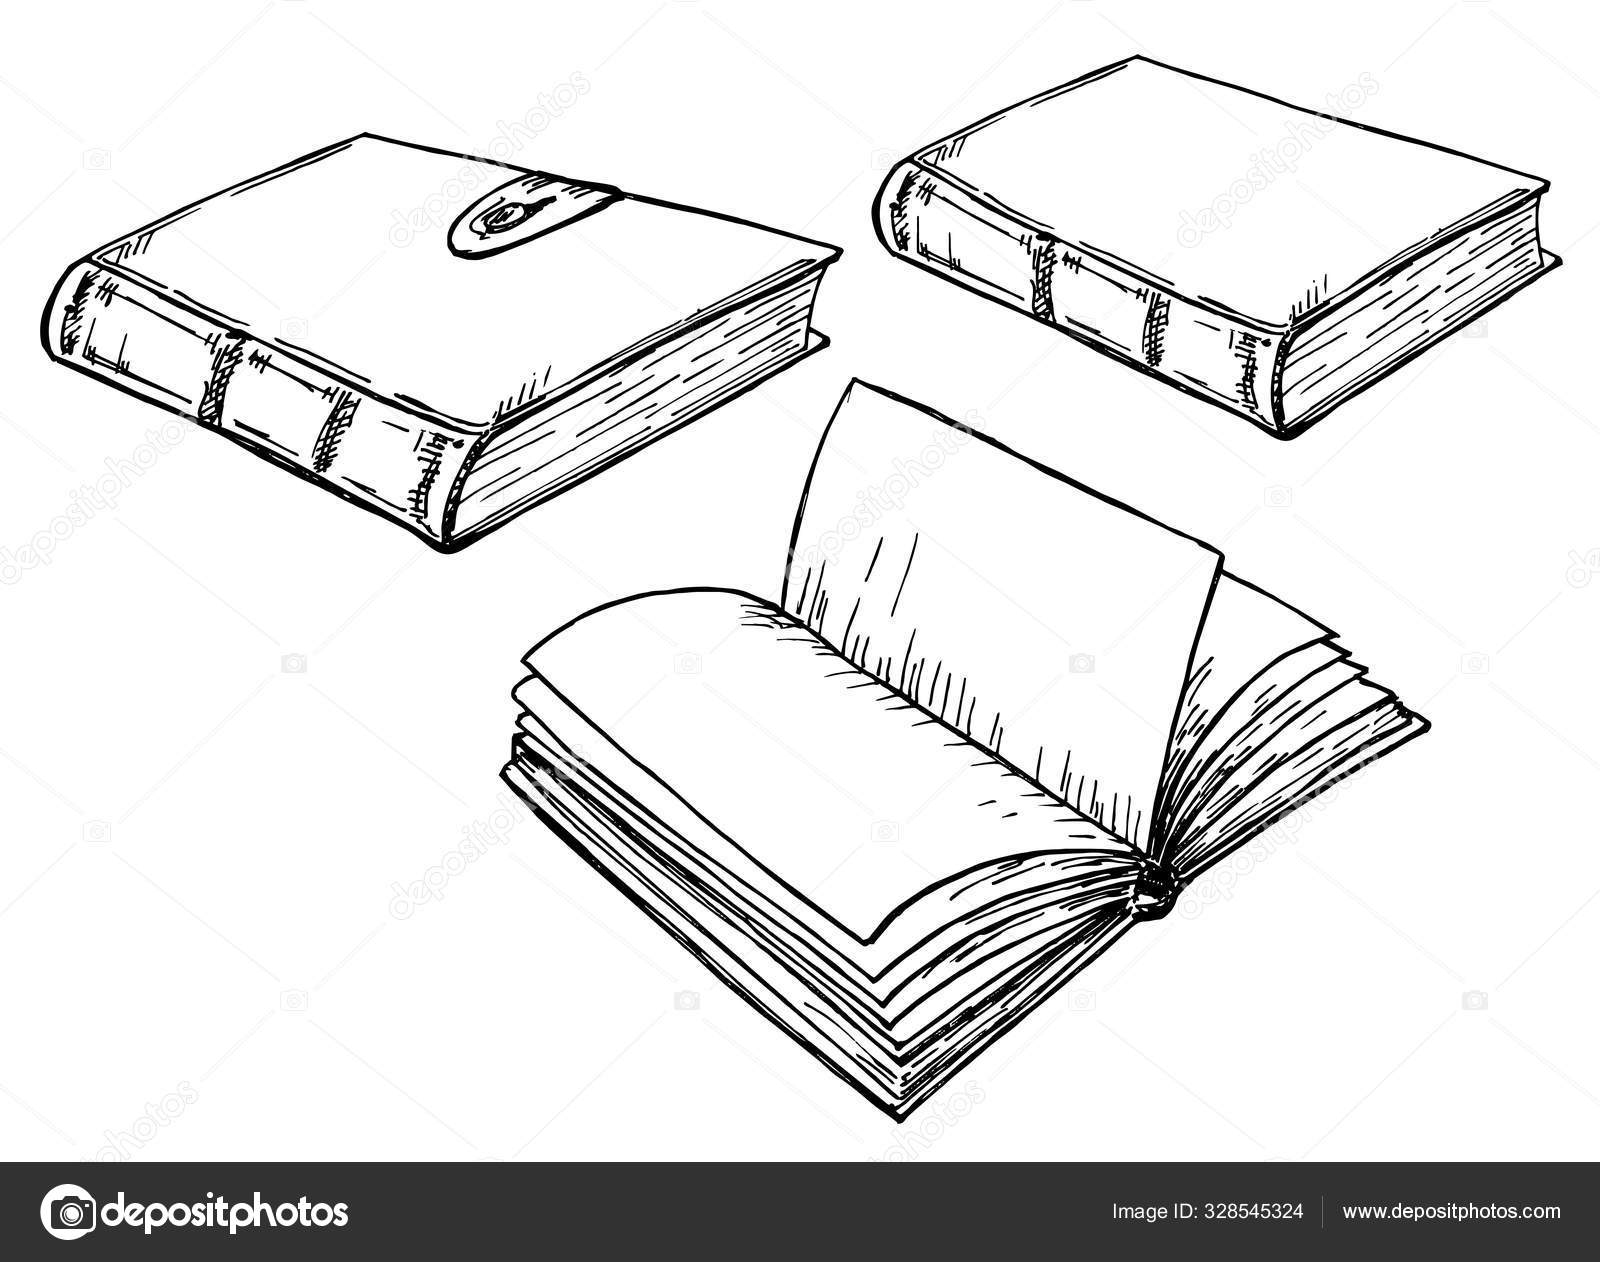 https://st3.depositphotos.com/4631829/32854/v/1600/depositphotos_328545324-stock-illustration-sketch-books-vintage-hand-drawing.jpg